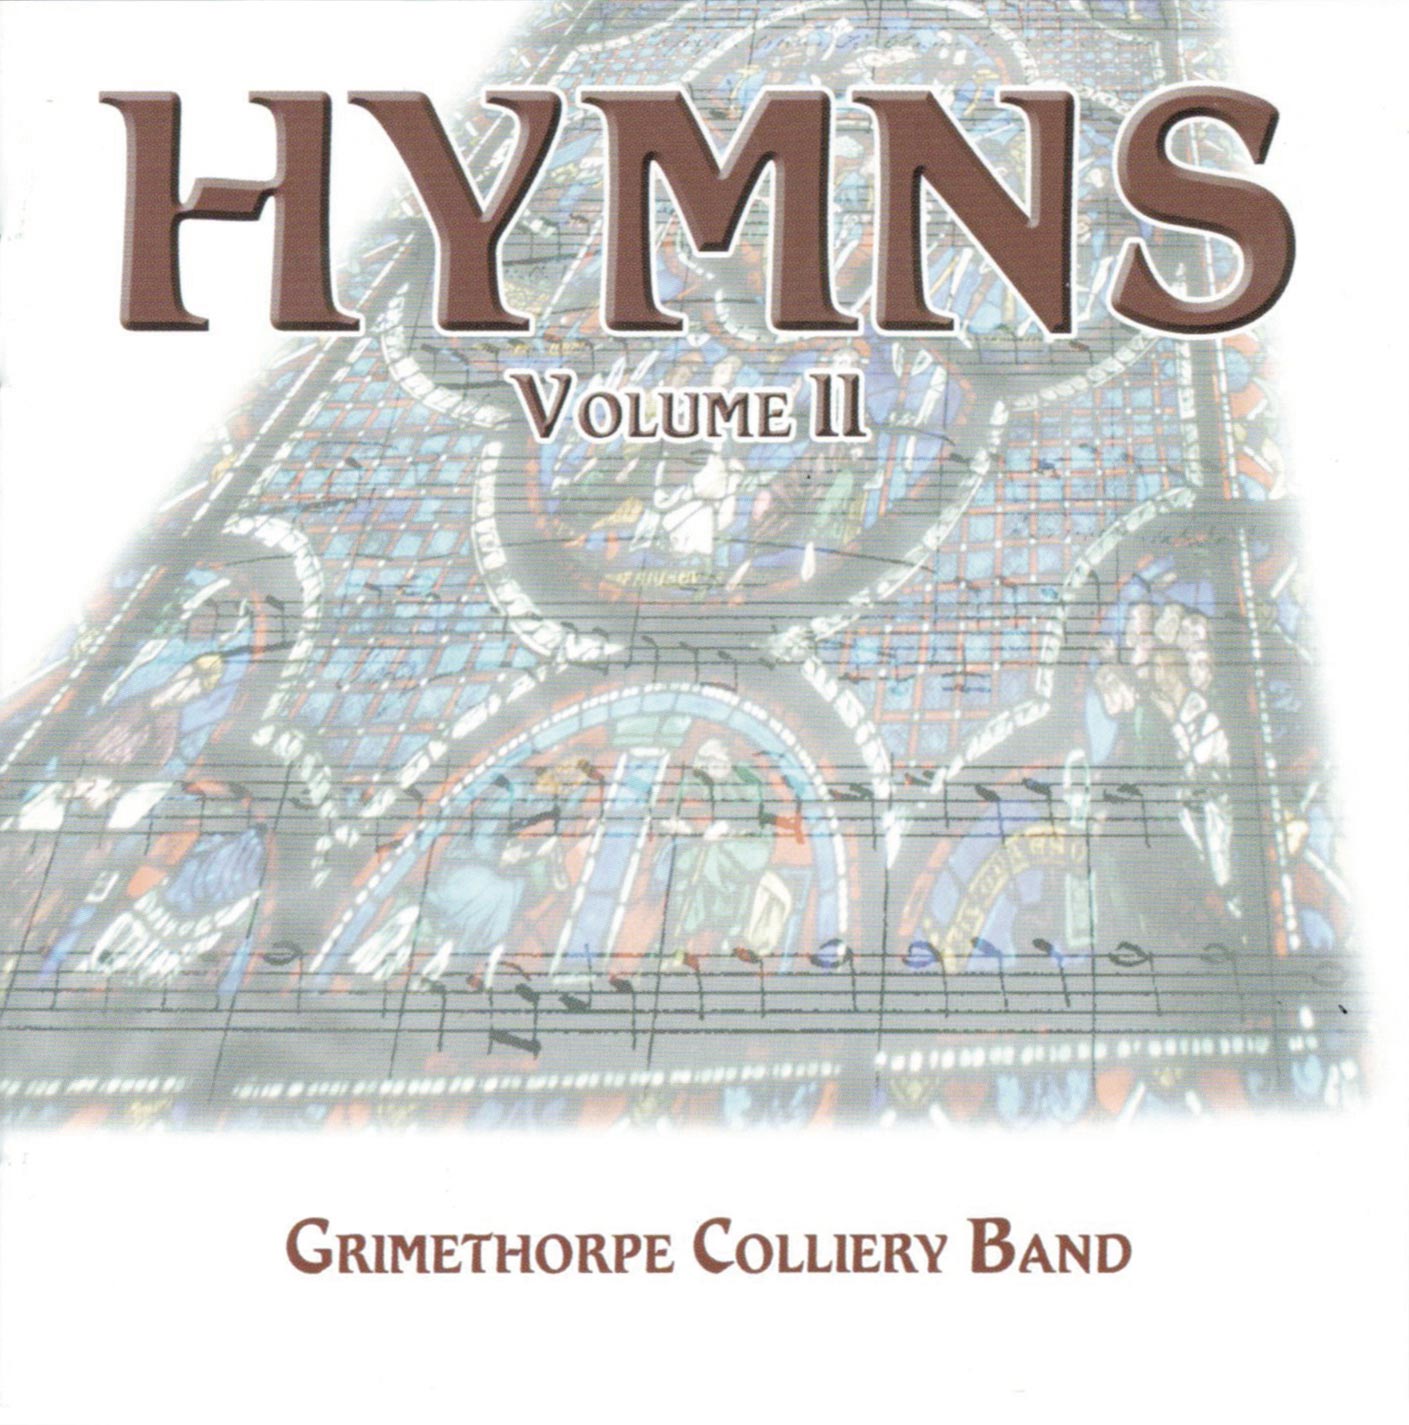 Hymns 2 - CD